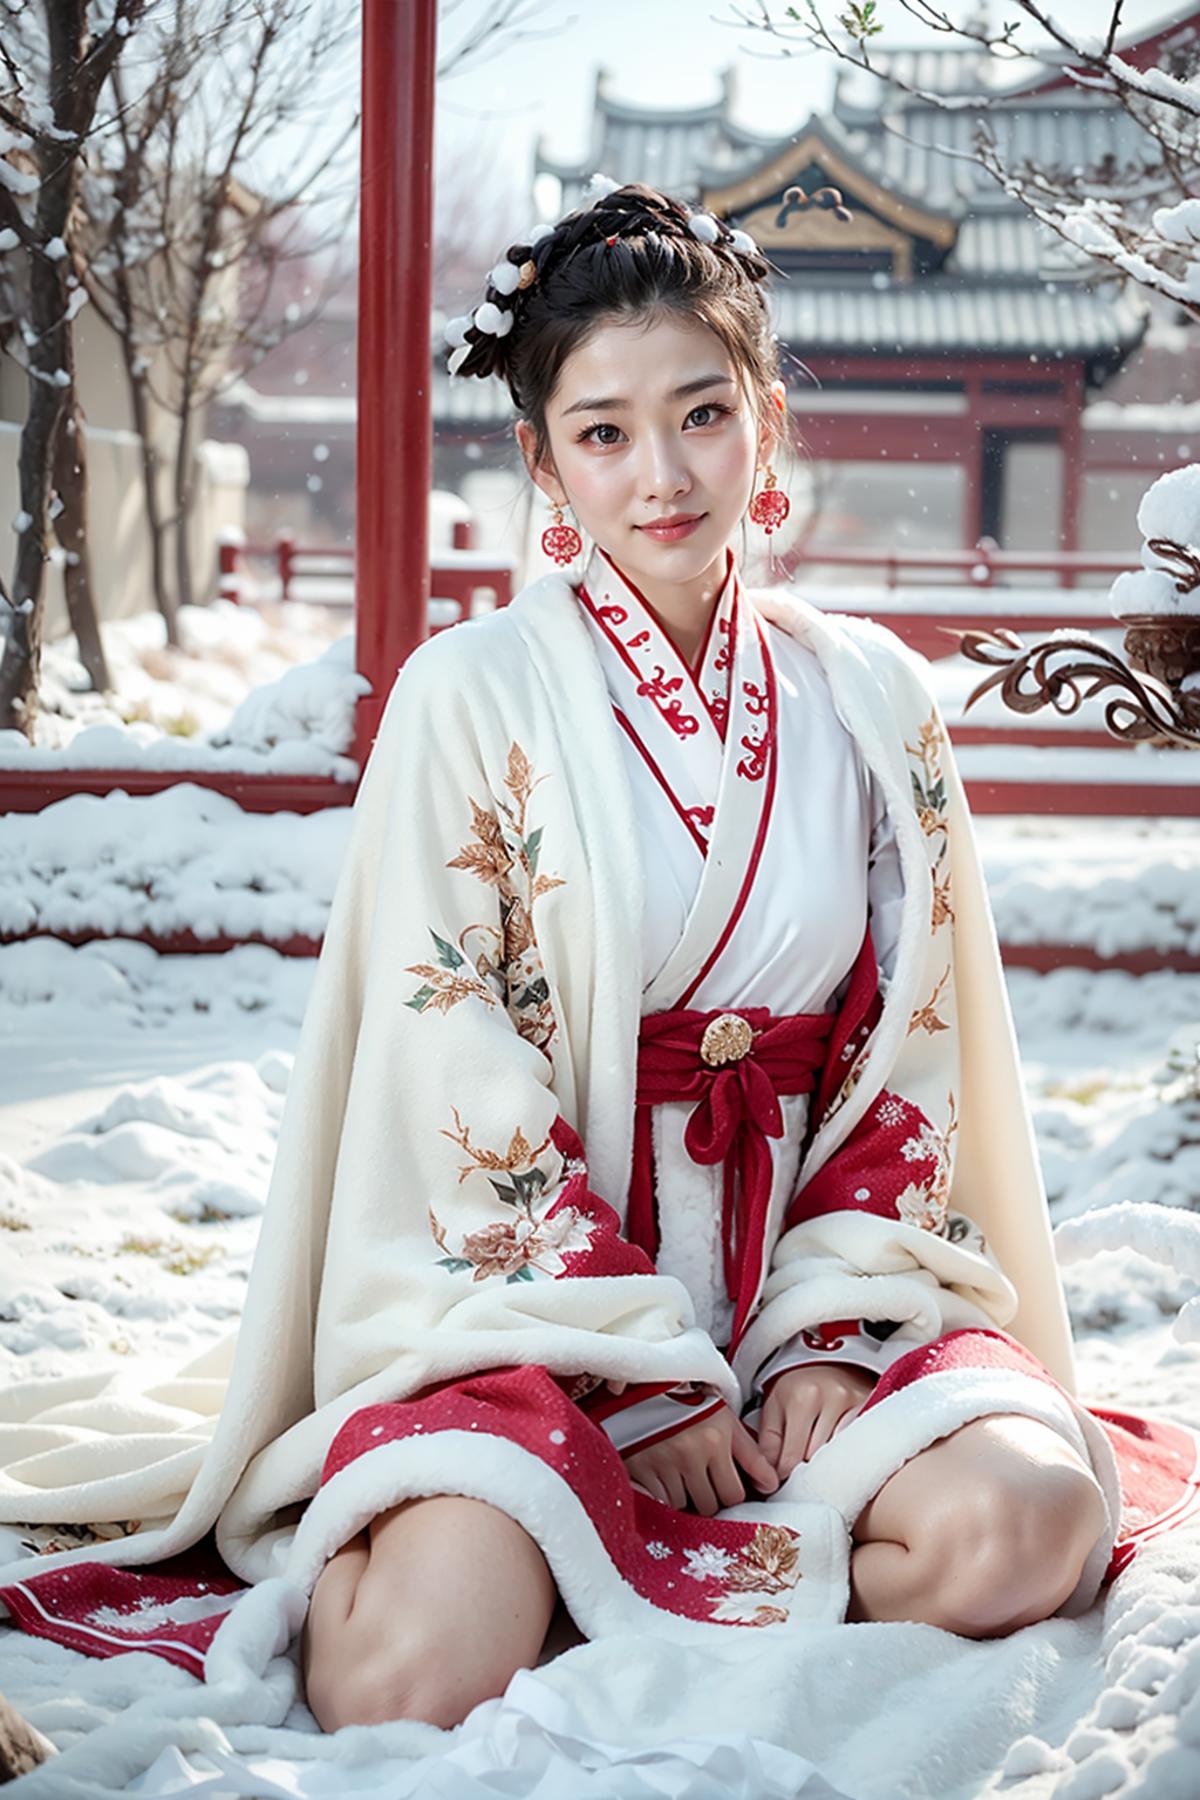 Winter Hanfu - Clothing LoRA image by feetie